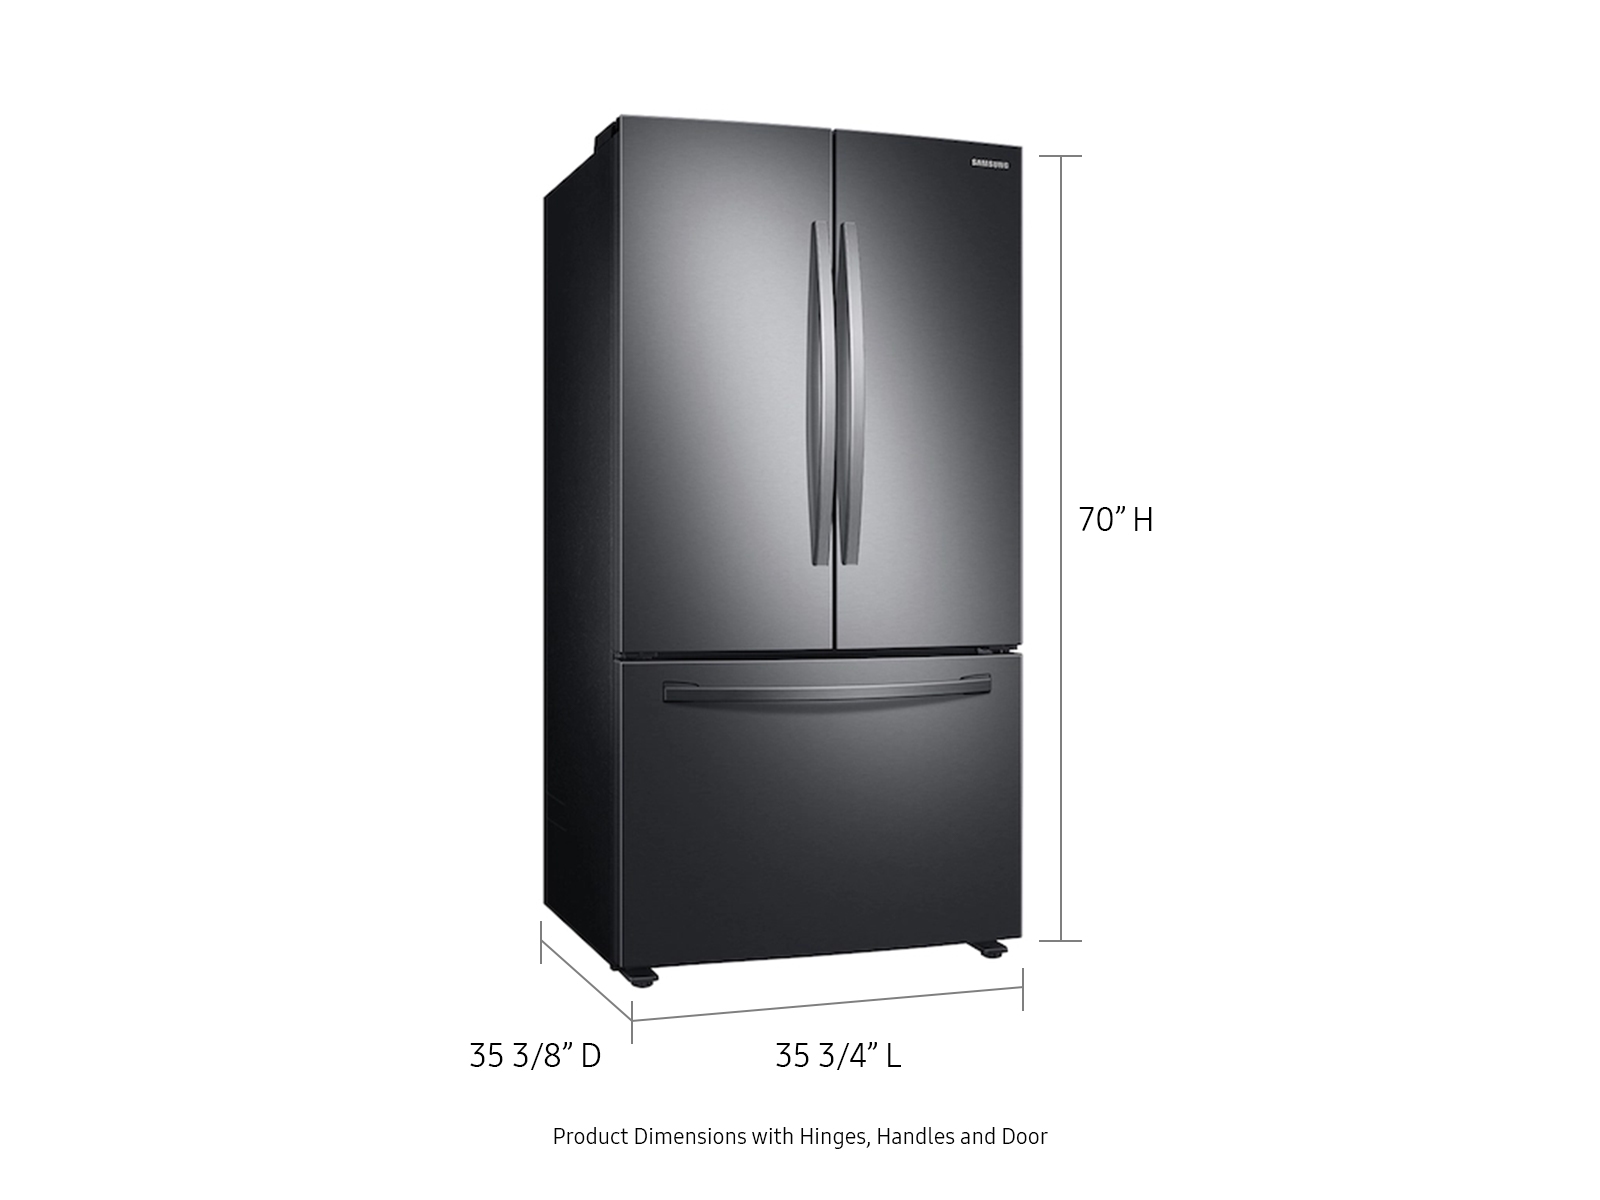 https://image-us.samsung.com/SamsungUS/home/home-appliances/refrigerators/pdp/10132021/Refrigerator_RF28T5021SG-AA_70x35-3-4x35-3-8.jpg?$product-details-jpg$